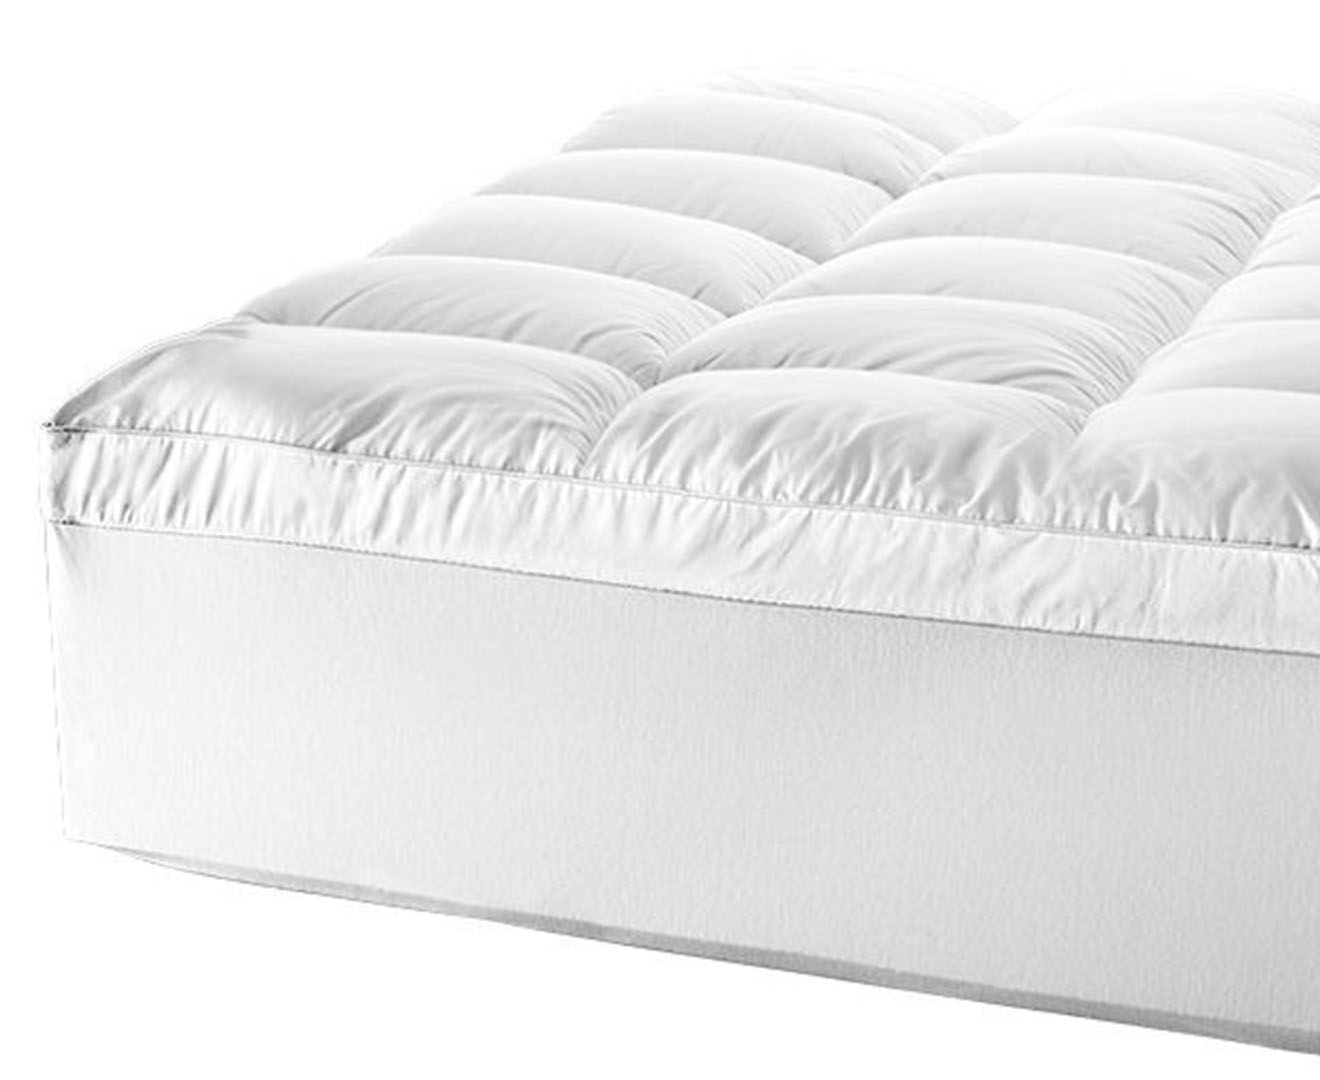 soft & snuggly mattress topper